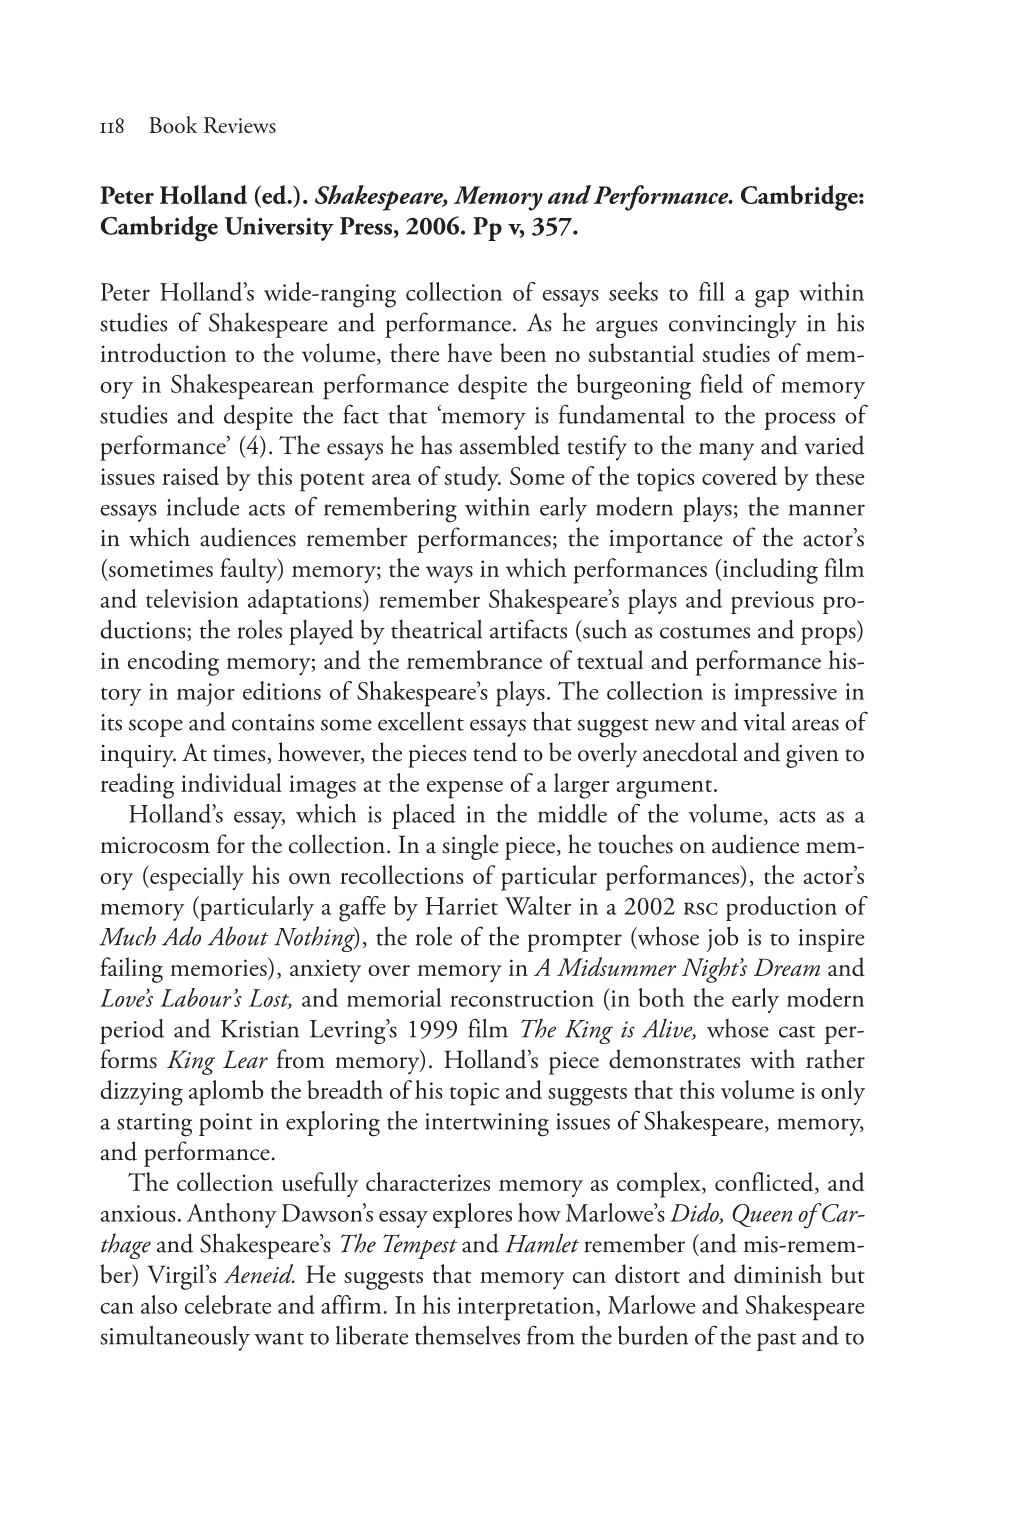 Peter Holland (Ed.). Shakespeare, Memory and Performance. Cambridge: Cambridge University Press, 2006. Pp V, 357. Peter Holland